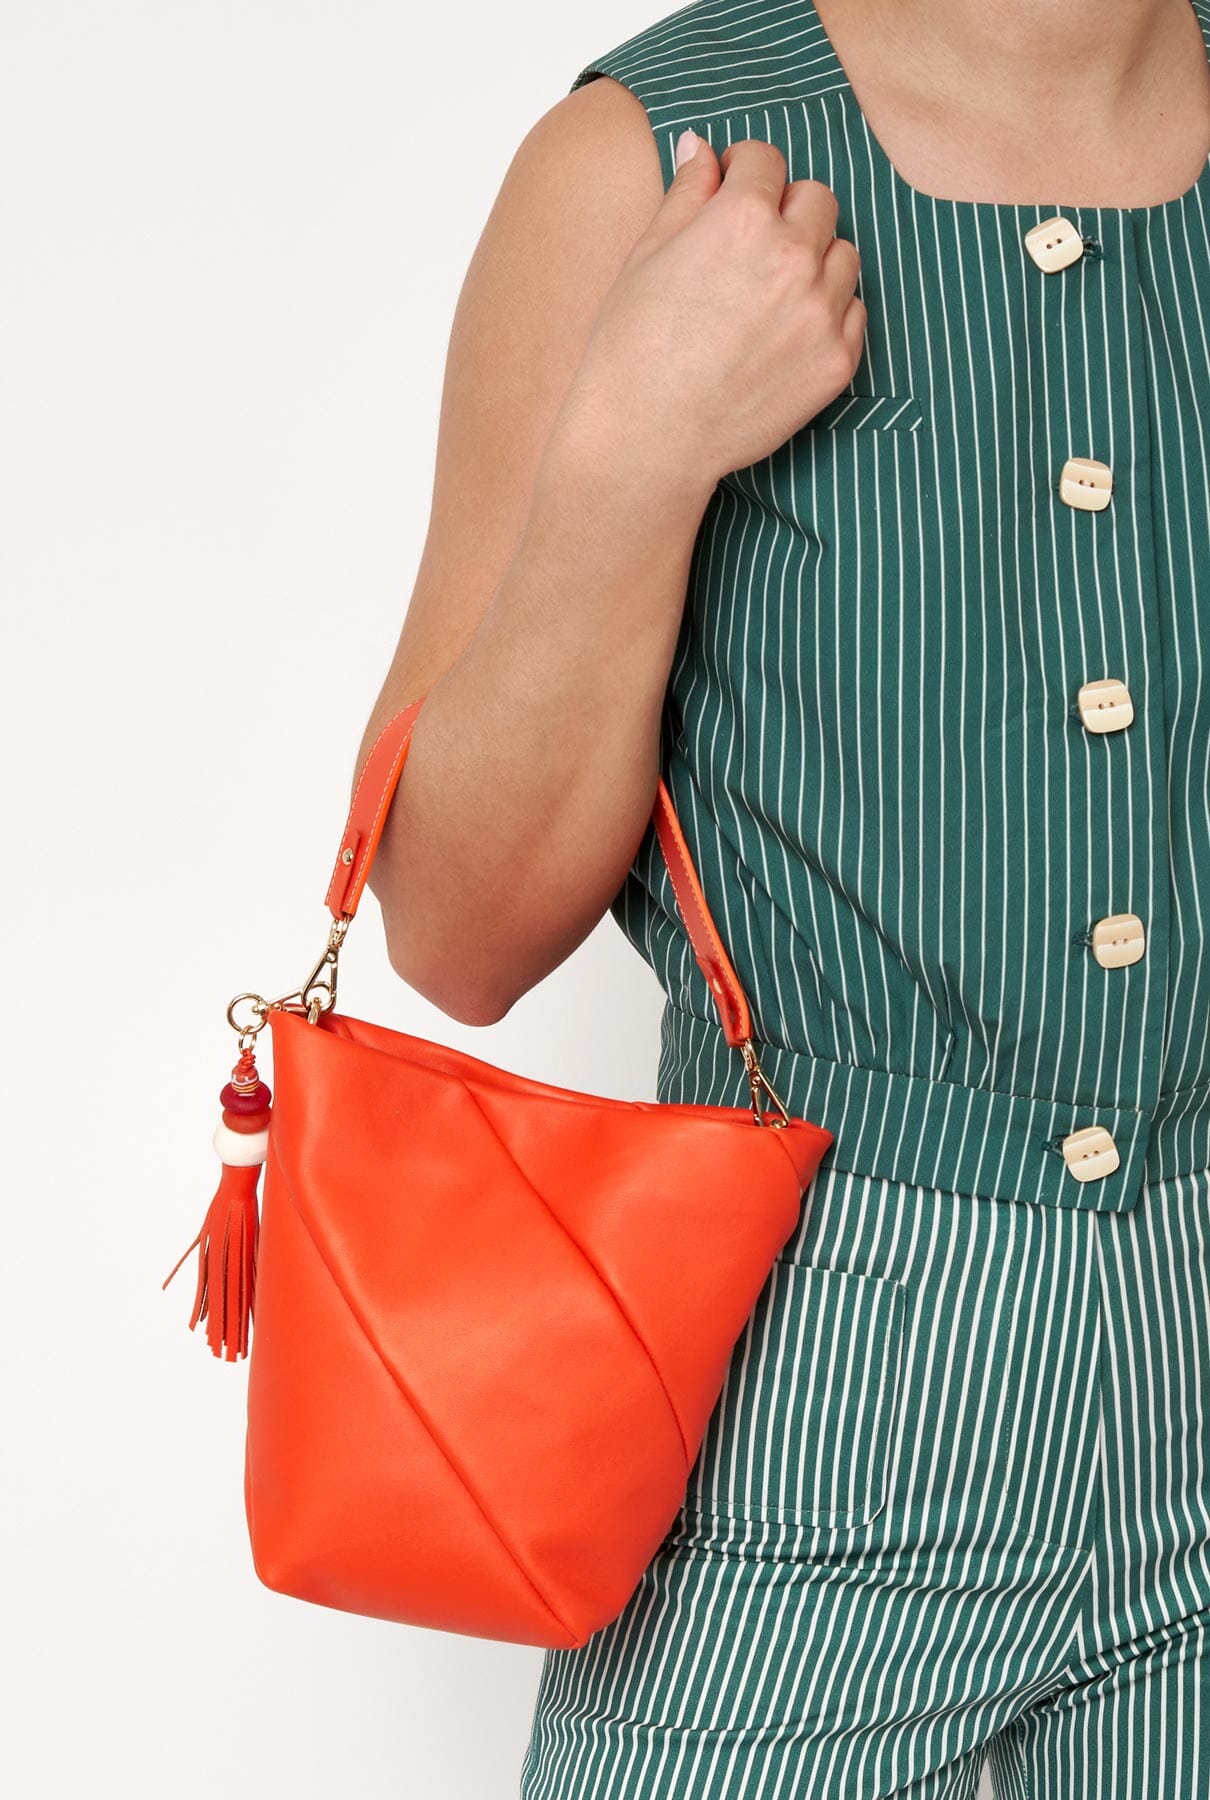 The Mini Lola Bag Naranja Hand bags The Bag Lab 